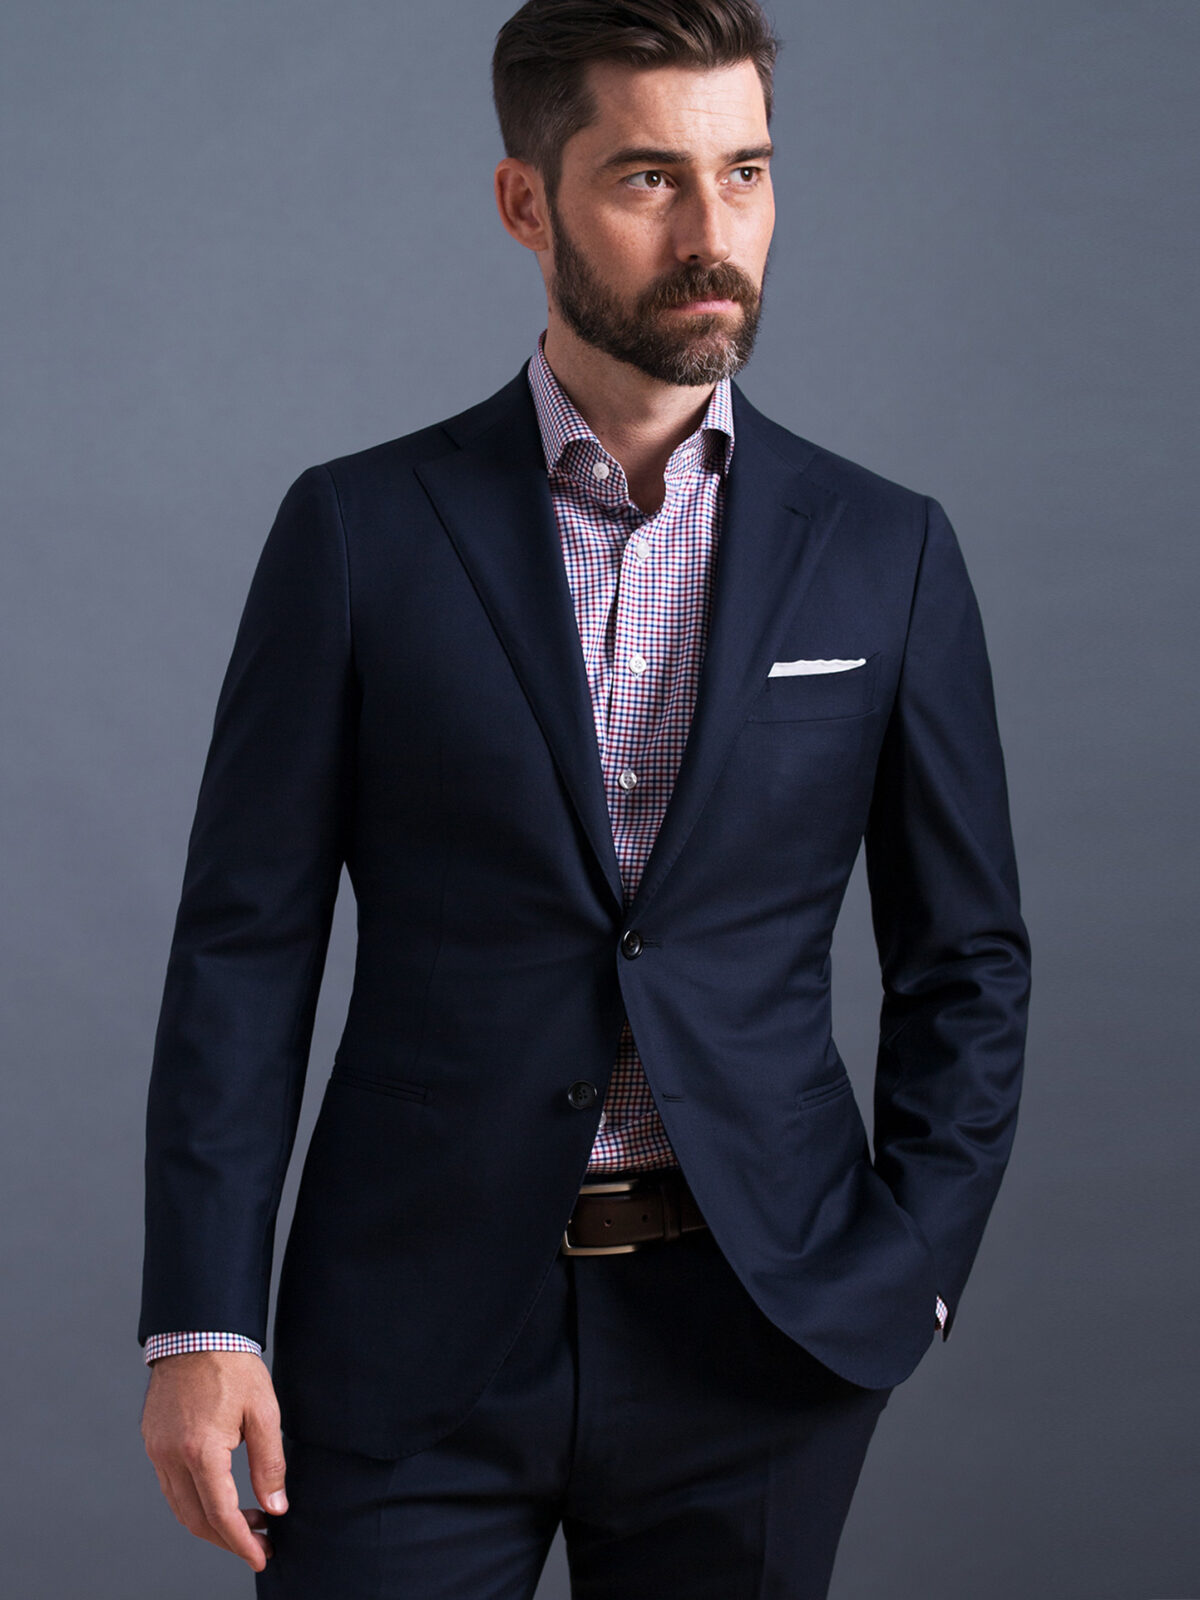 Grey blazer blue trousers,but with socks! | Mens fashion blazer, Mens  fashion suits, Business attire for men